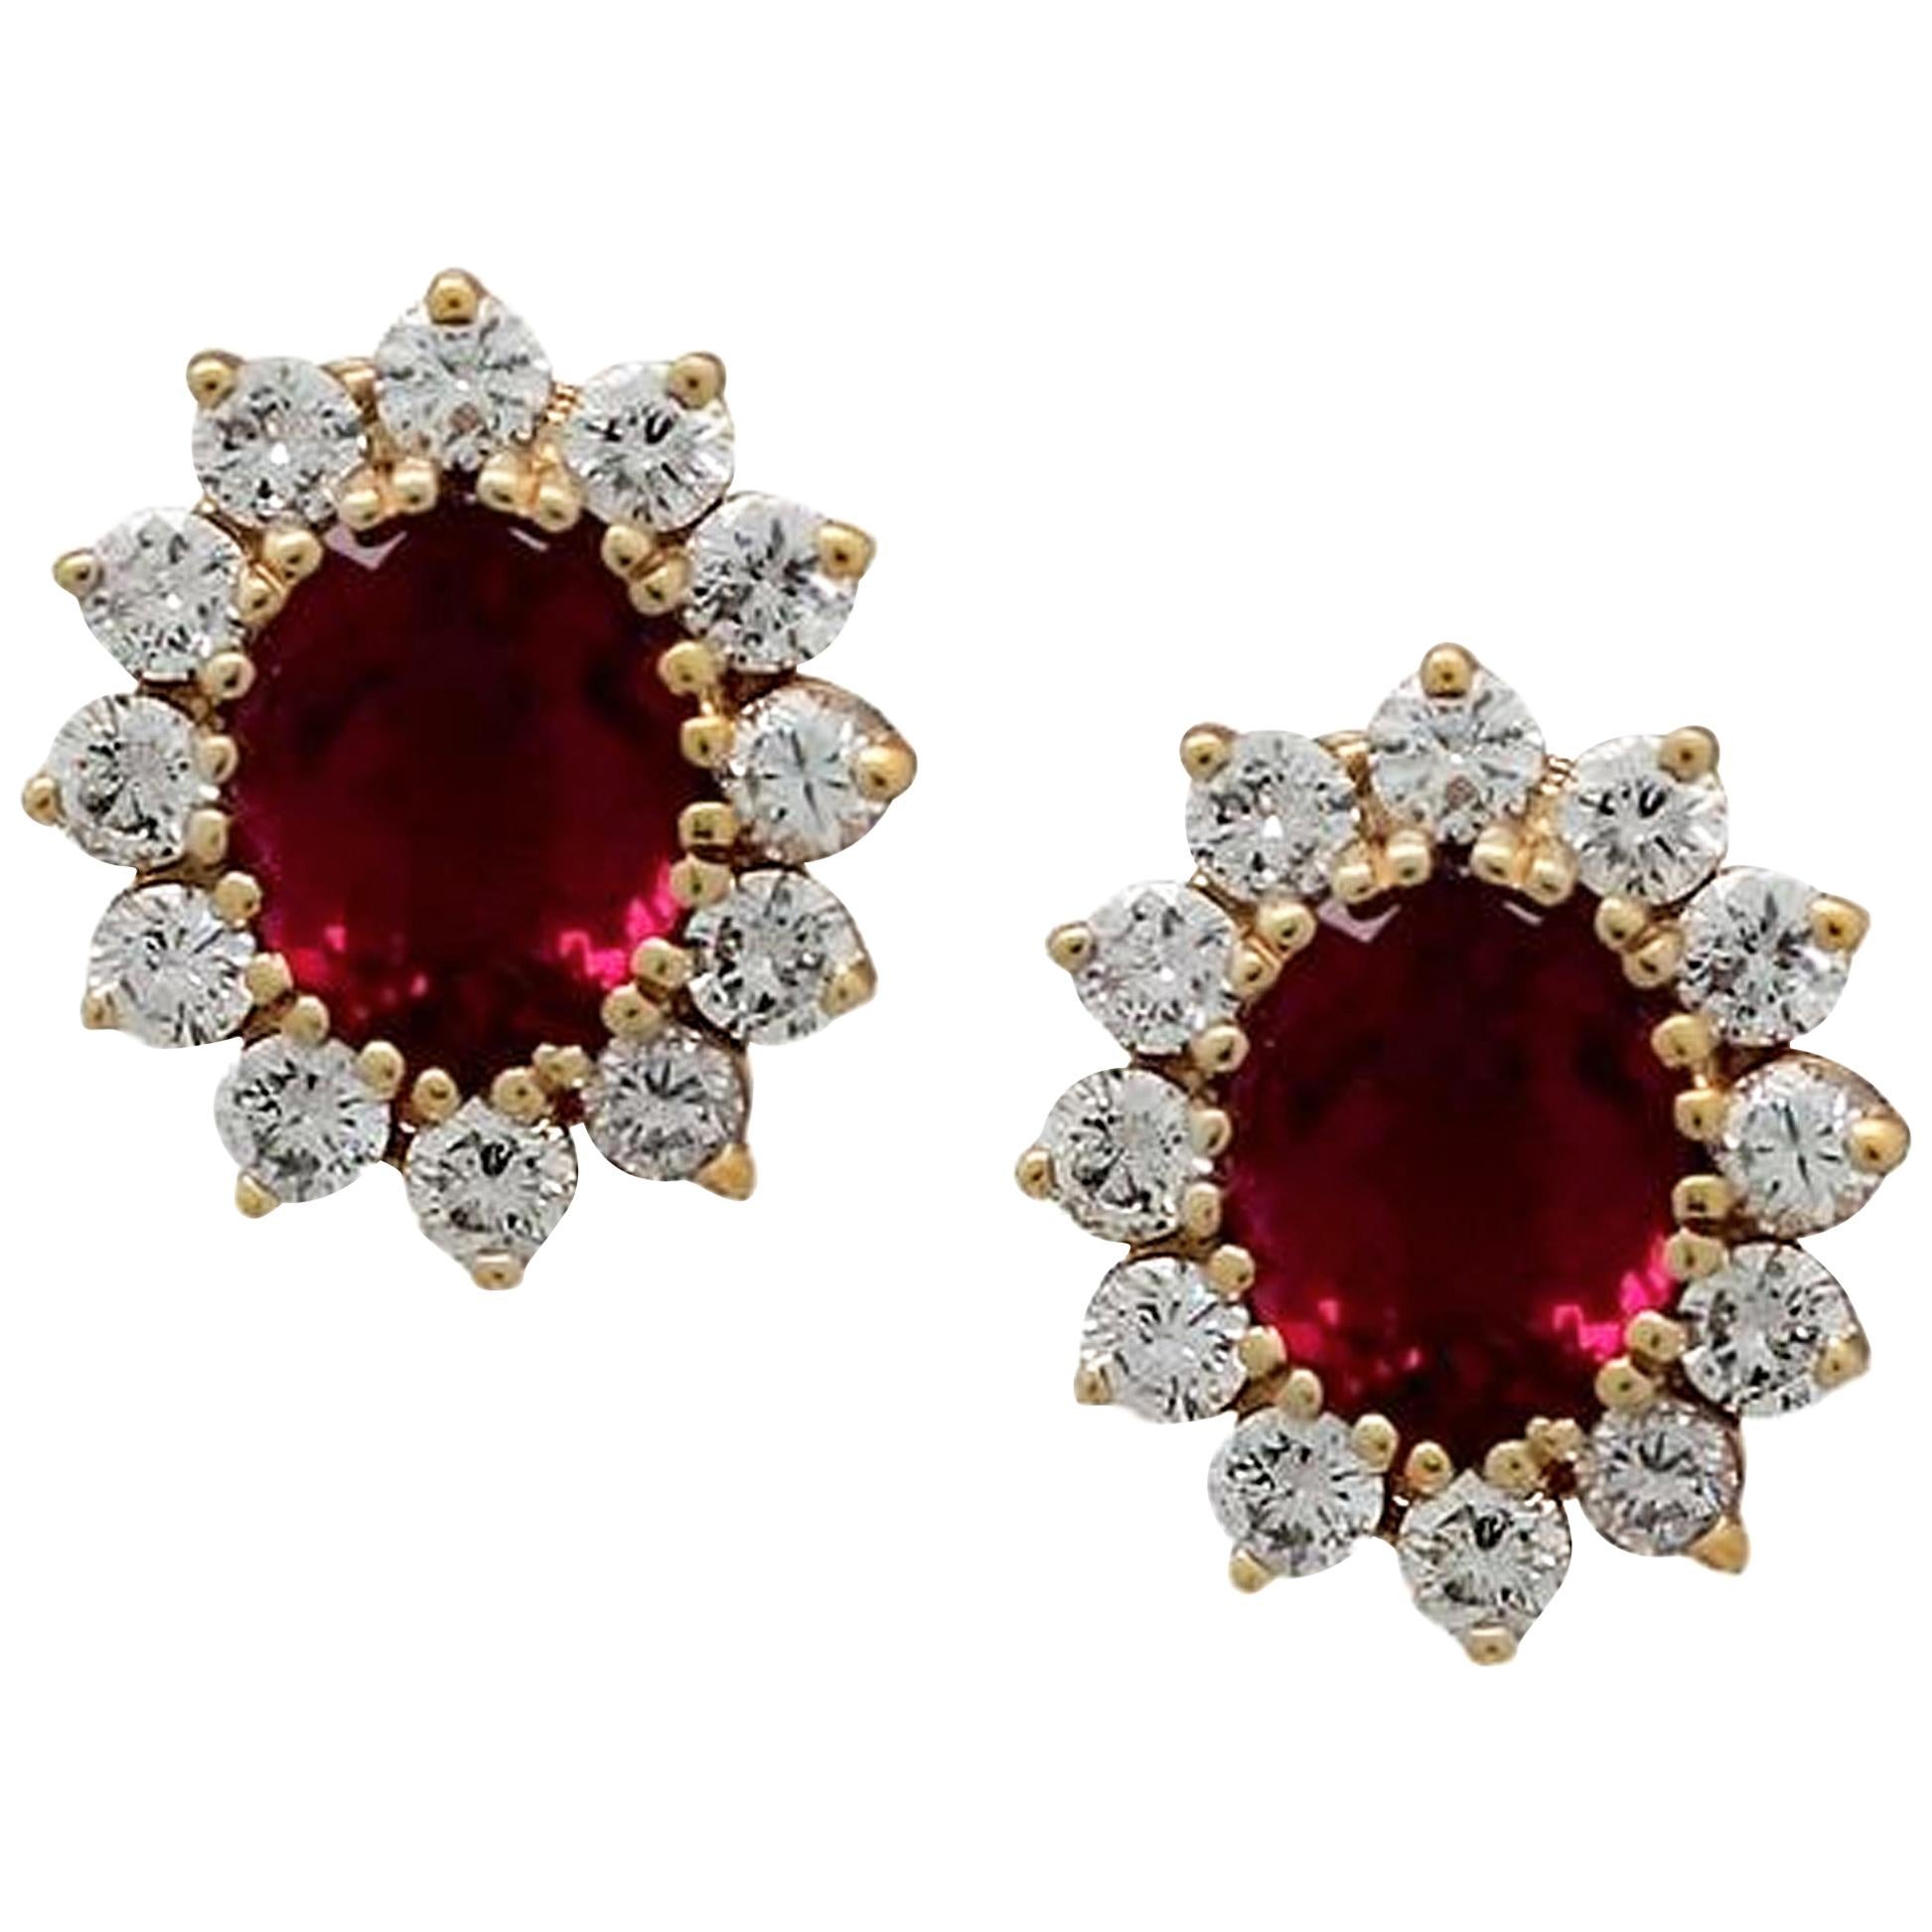 Crimson Oval Tourmaline & Diamond Cluster Stud Earrings in 14kt Y/G For Sale